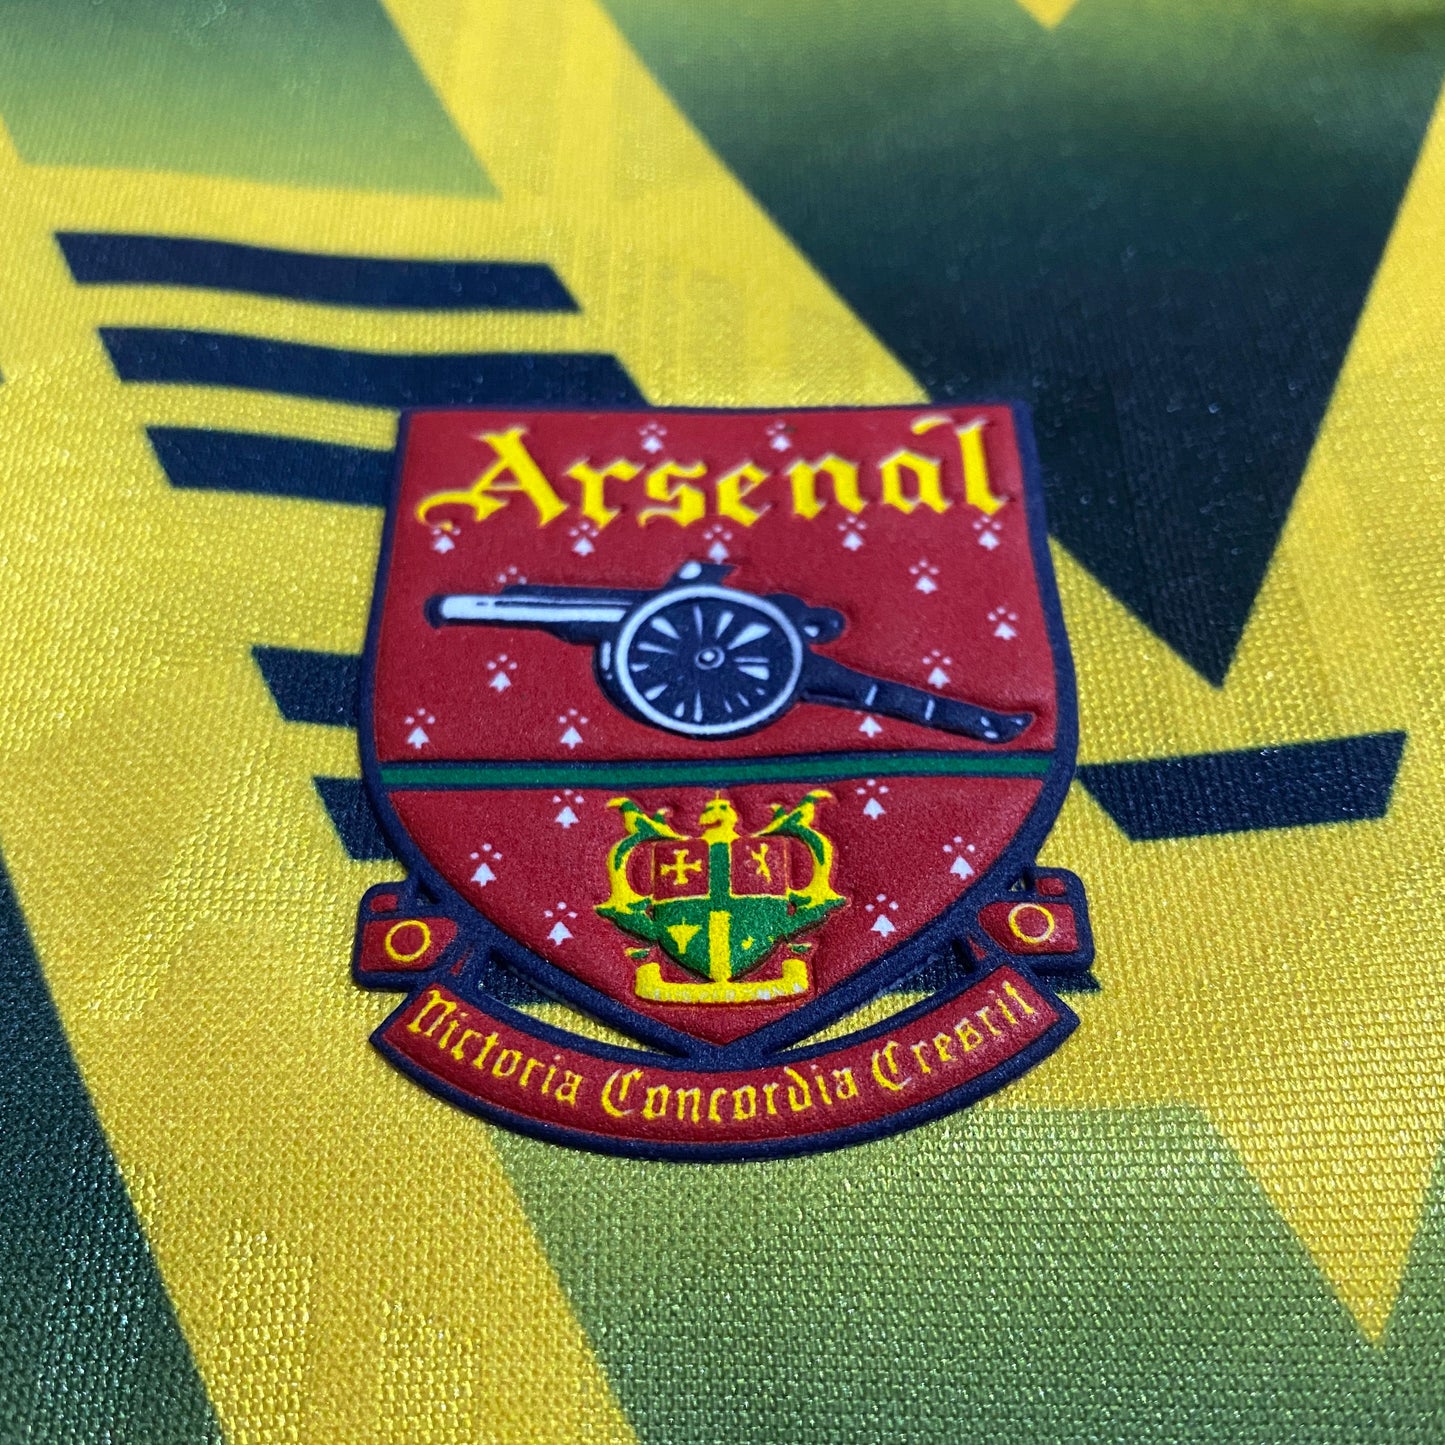 Retro Arsenal Away Kit Bruised Banana